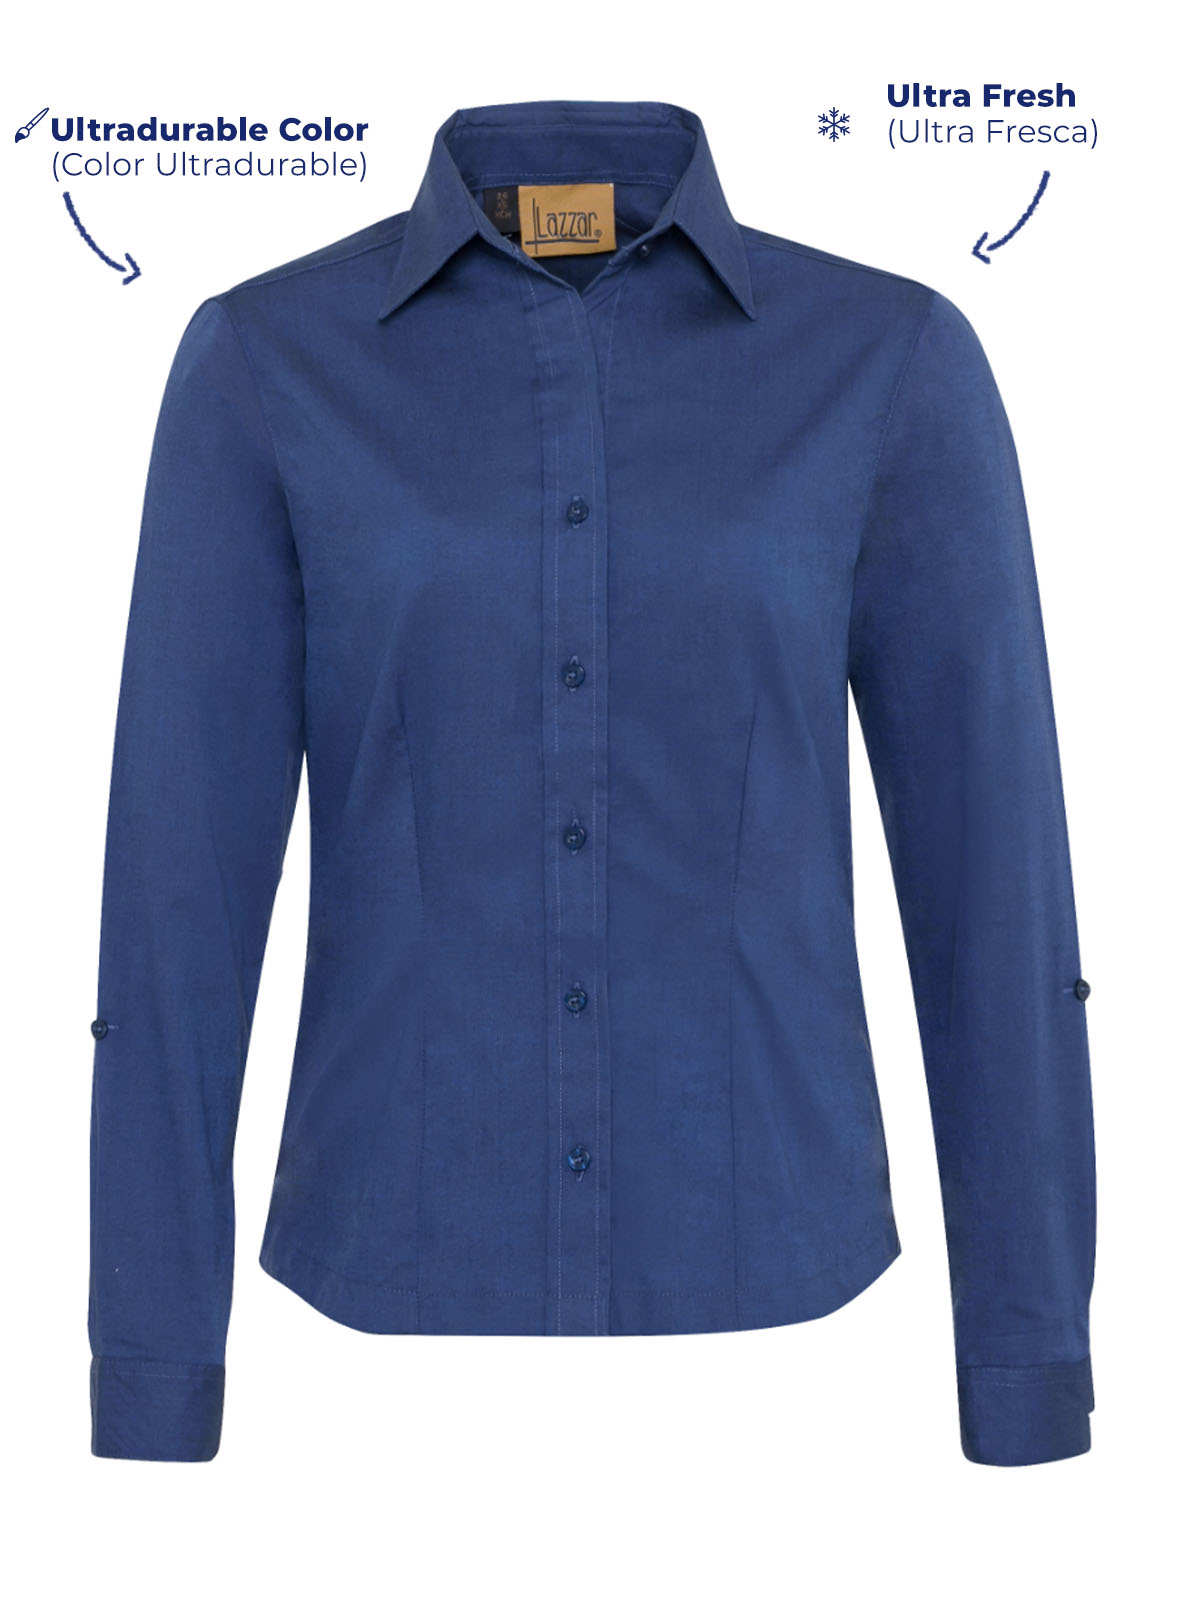 Navy blue oxford blouse